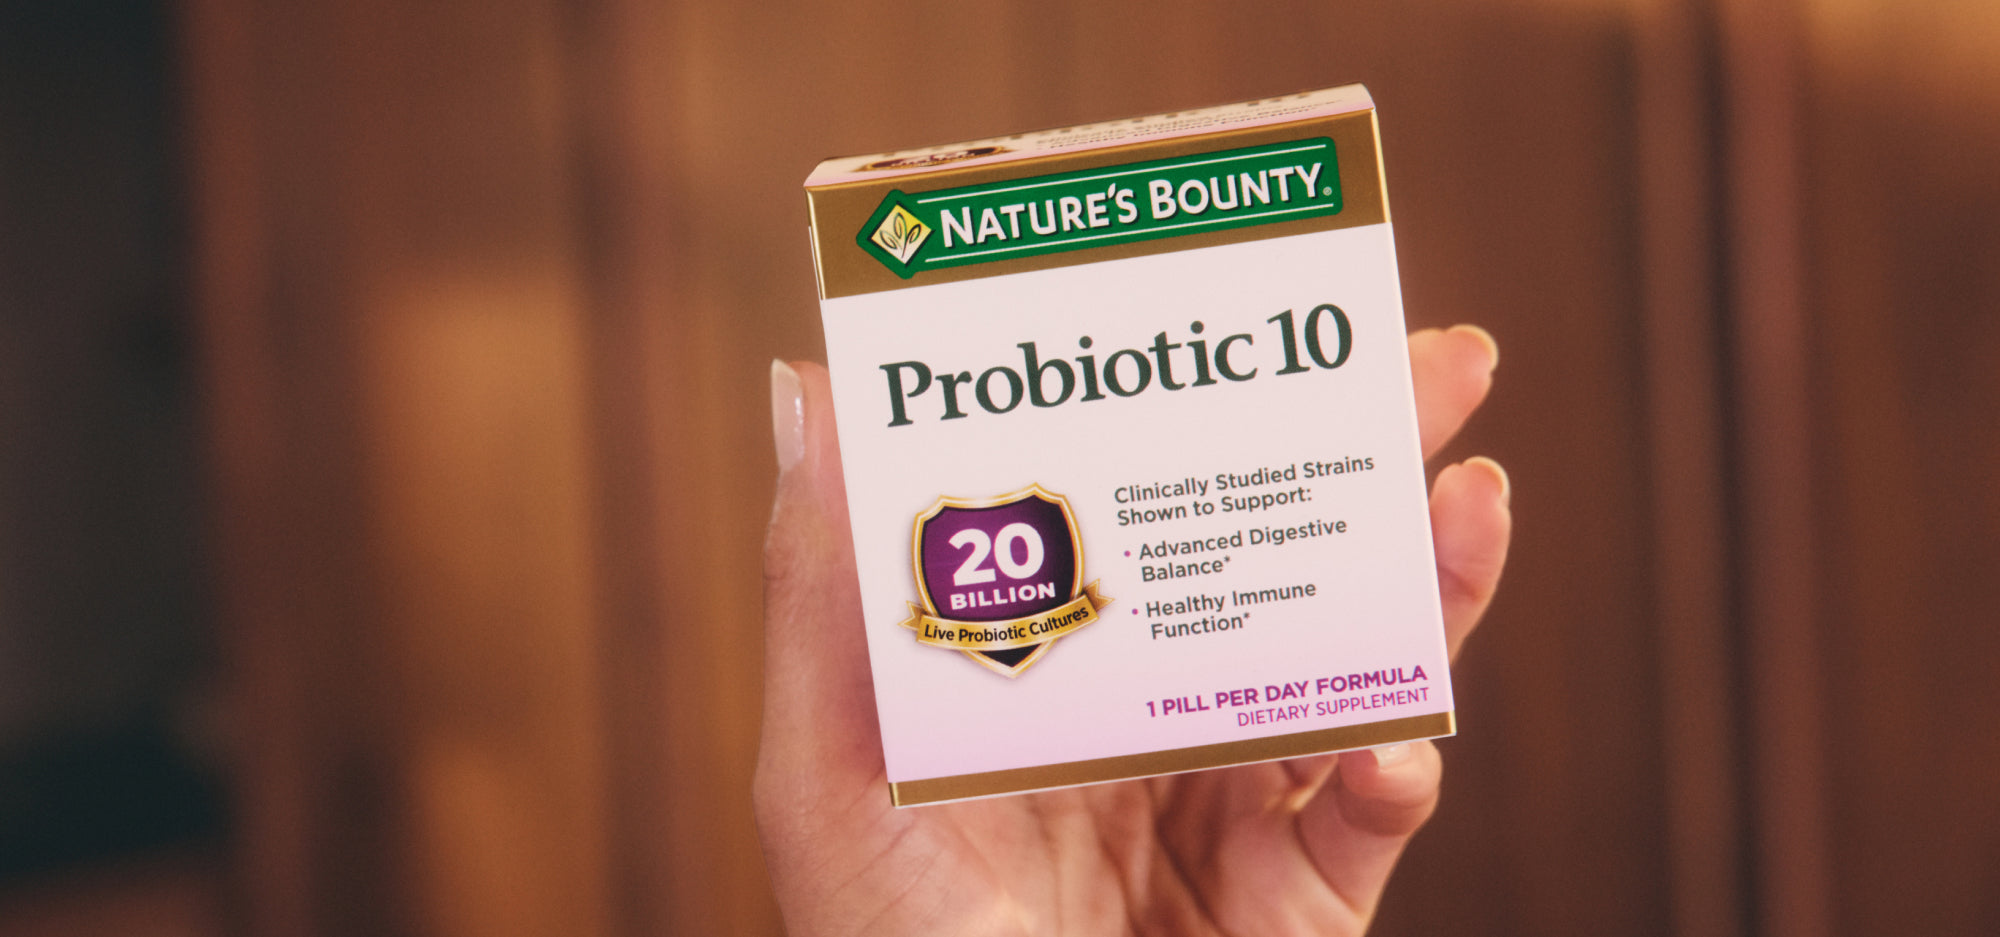 Digestive Probiotic 10